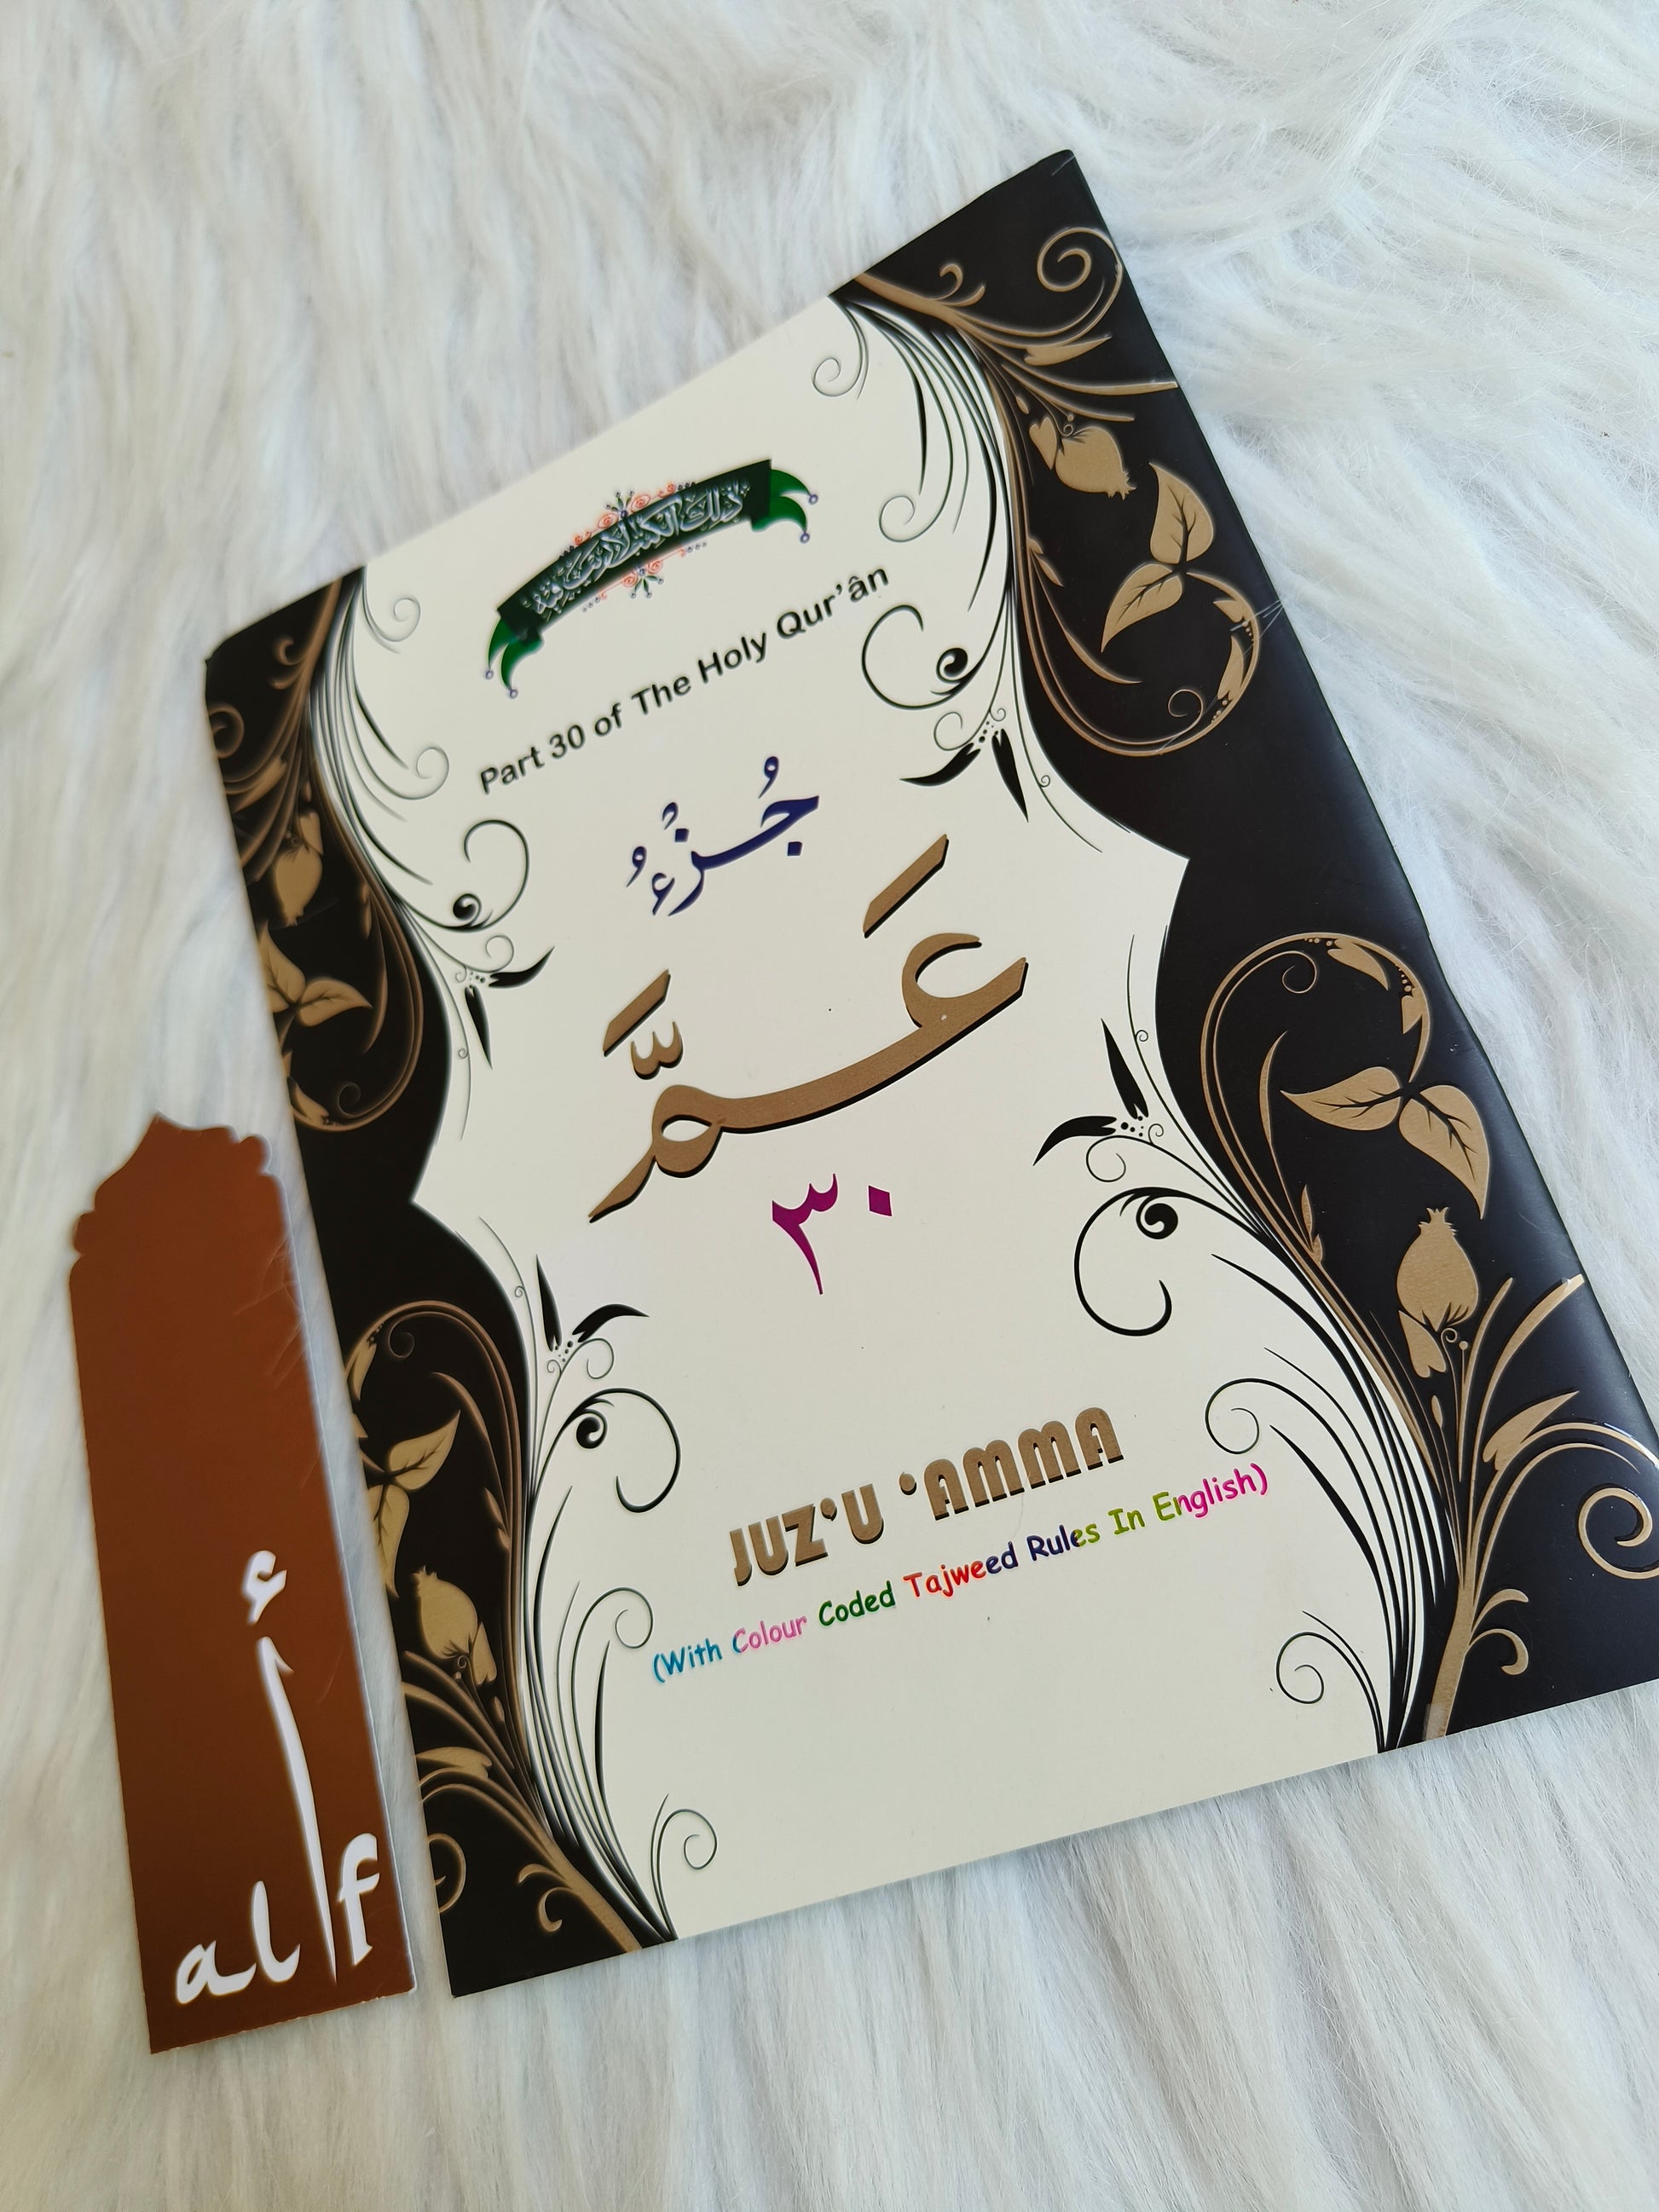 JUZ'U'AMMA [Part 30 of the holy quran] alifthebookstore